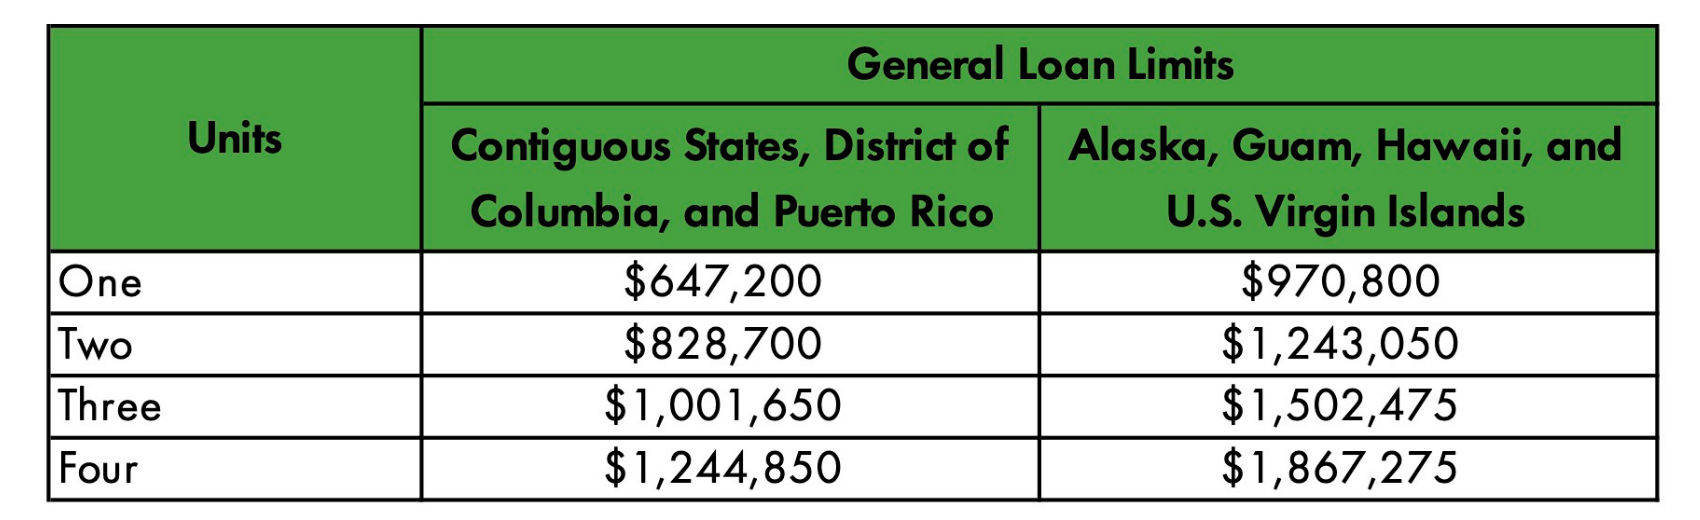 2022 General Loan Limits